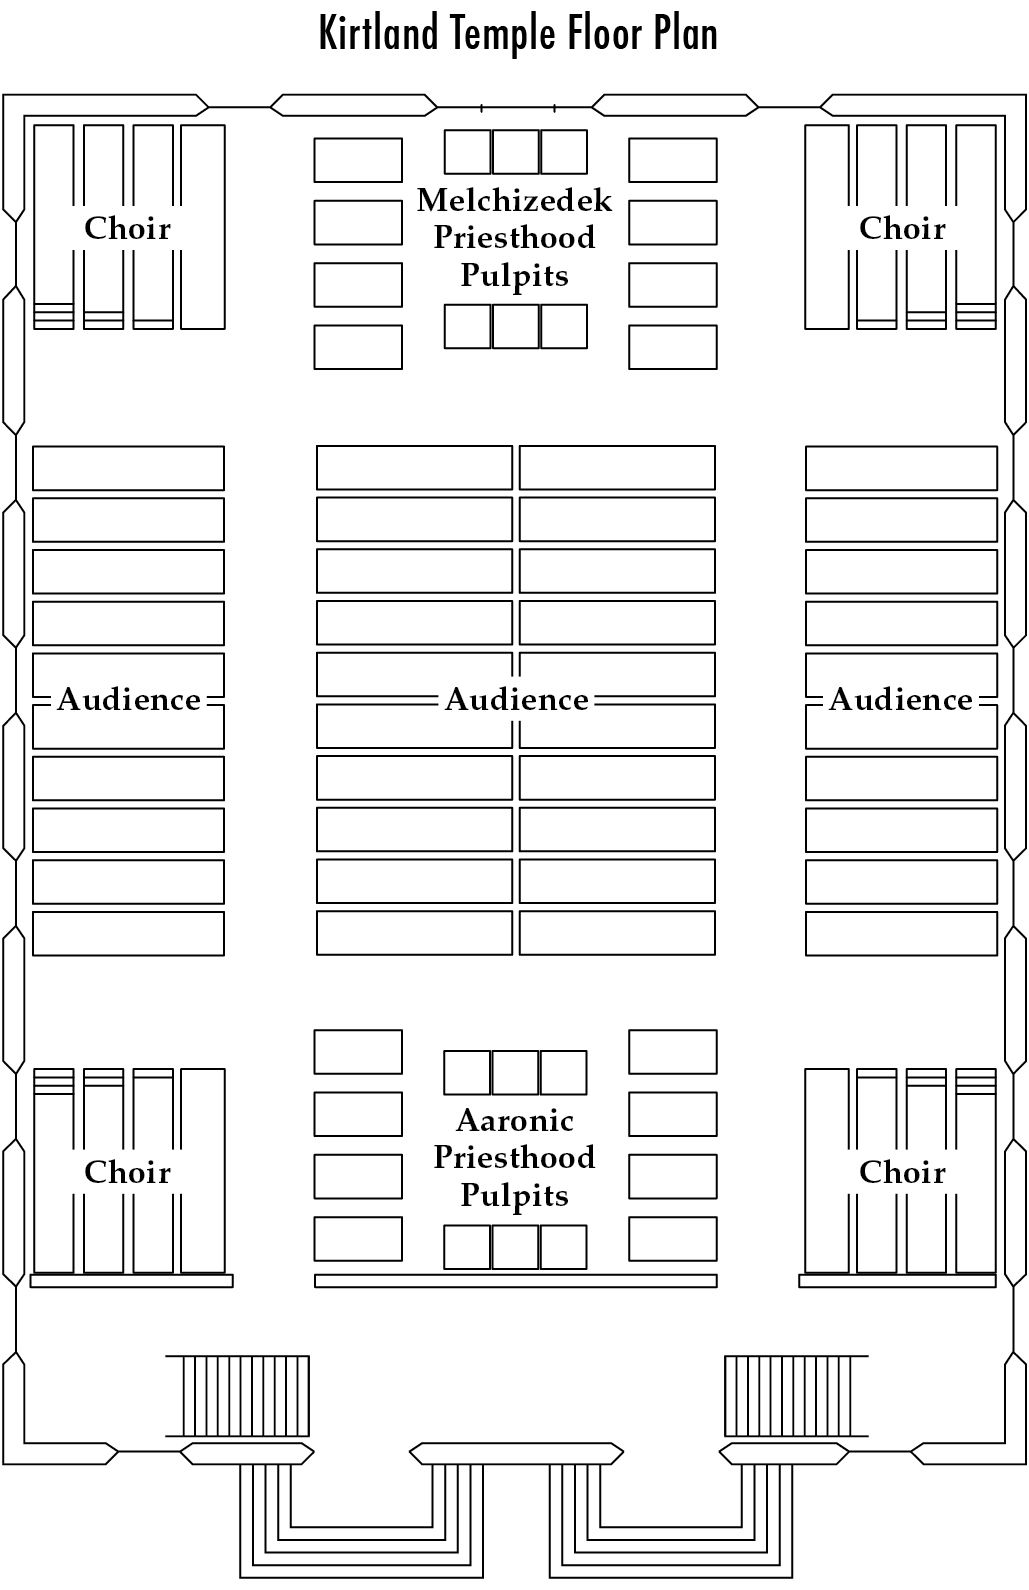 Kirtland Temple Floor Plan